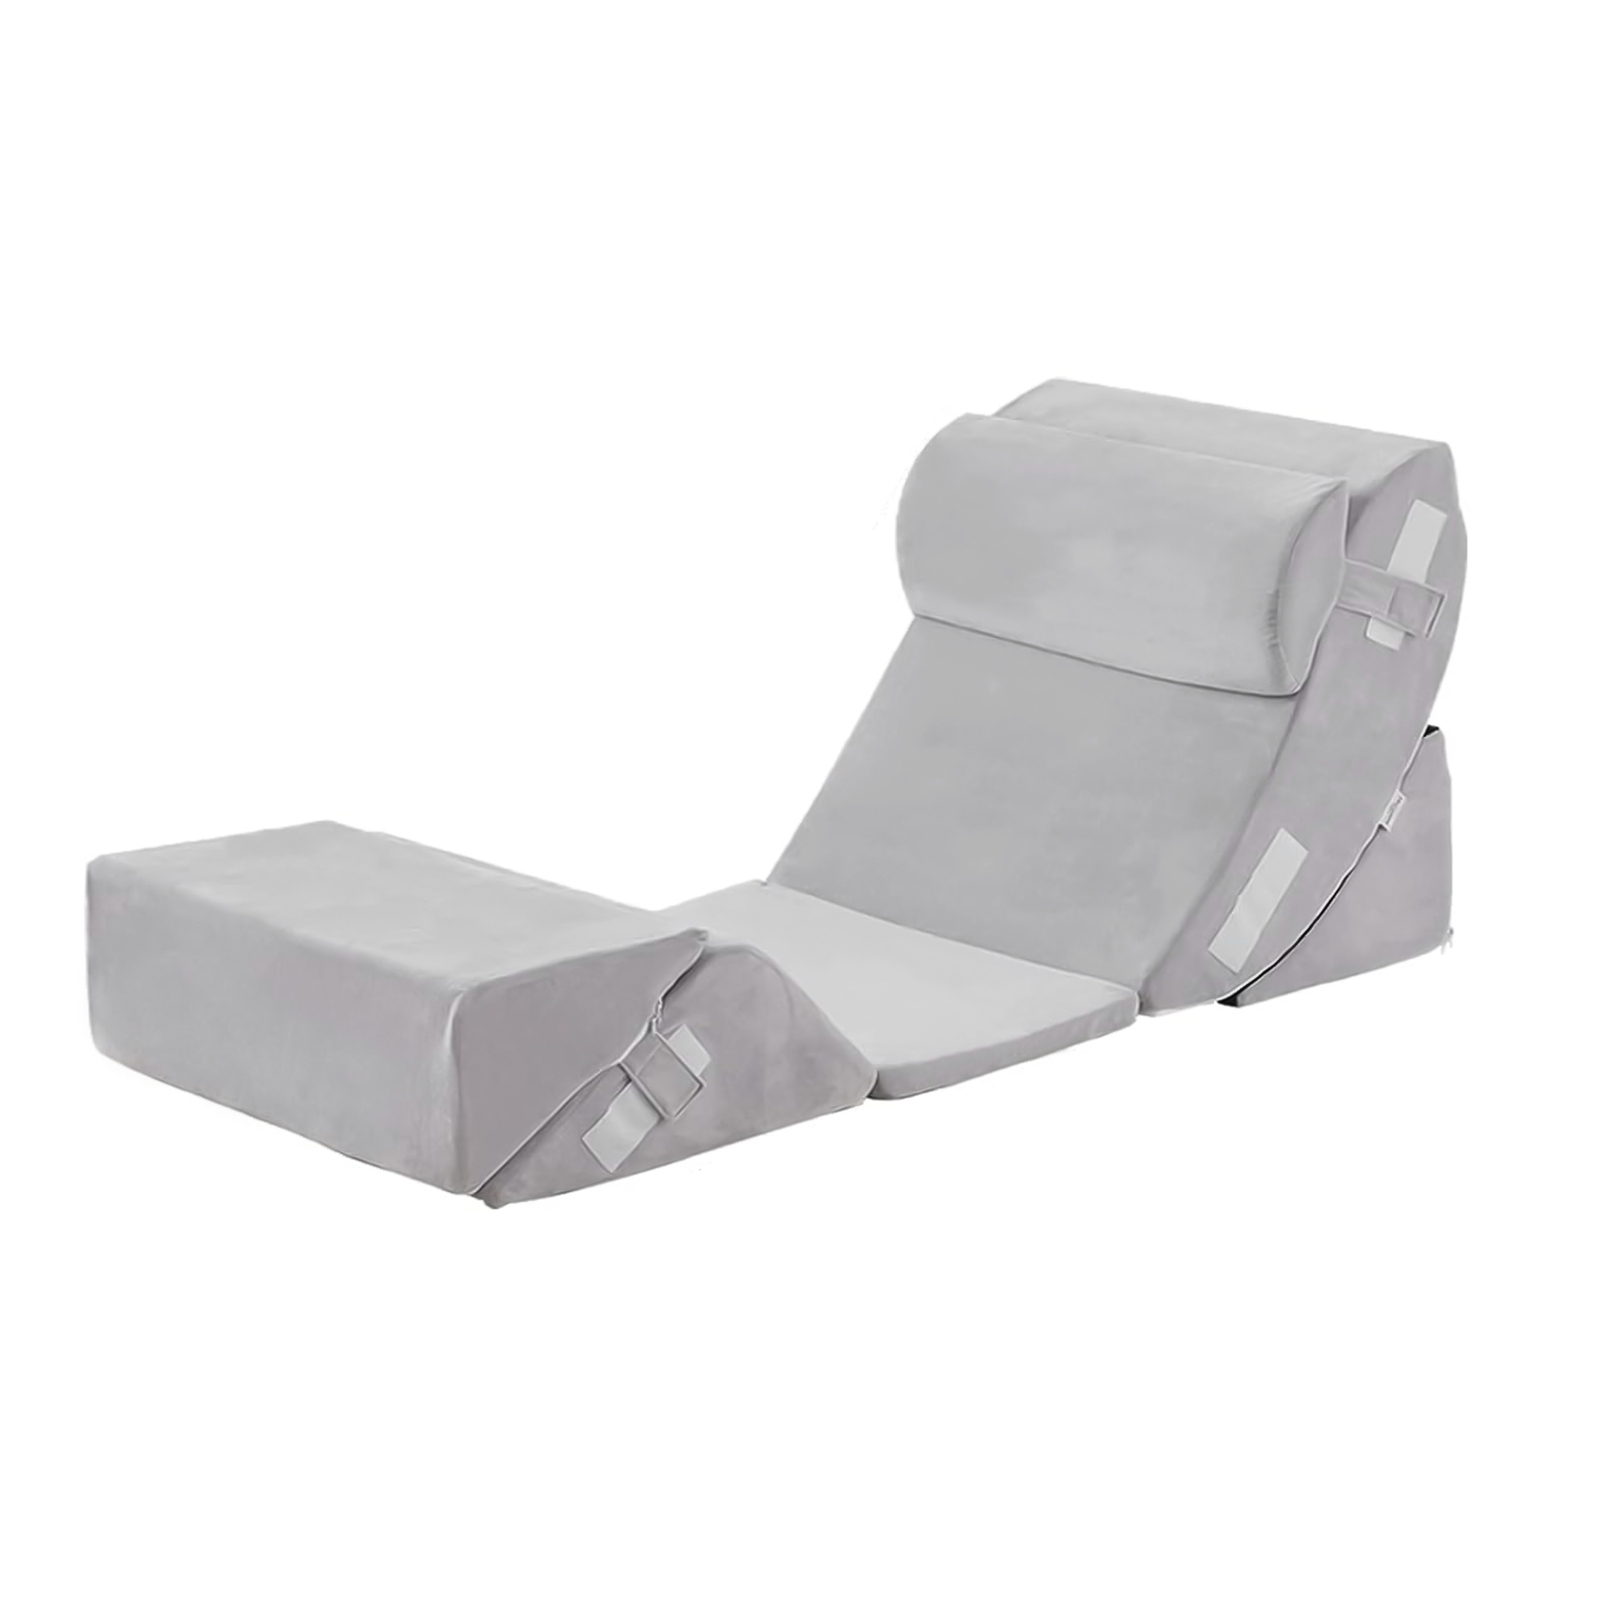 6 pcs Wedge Pillow Memory Foam Orthopaedic Ergonomic Pillow Cushion